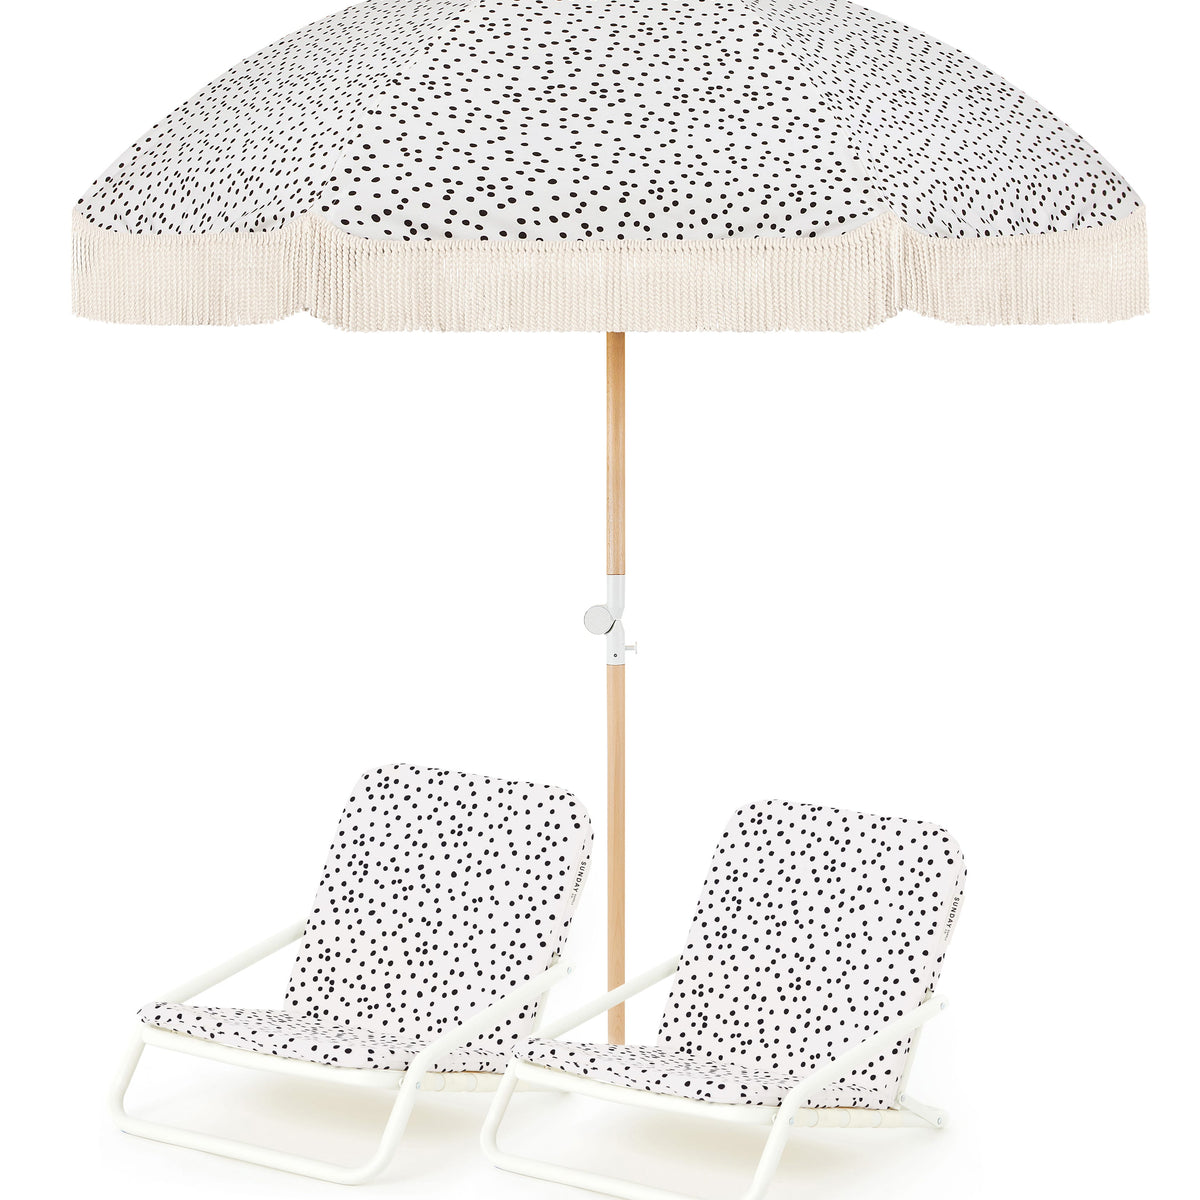 Salt Beach Umbrella & Beach Chair Set